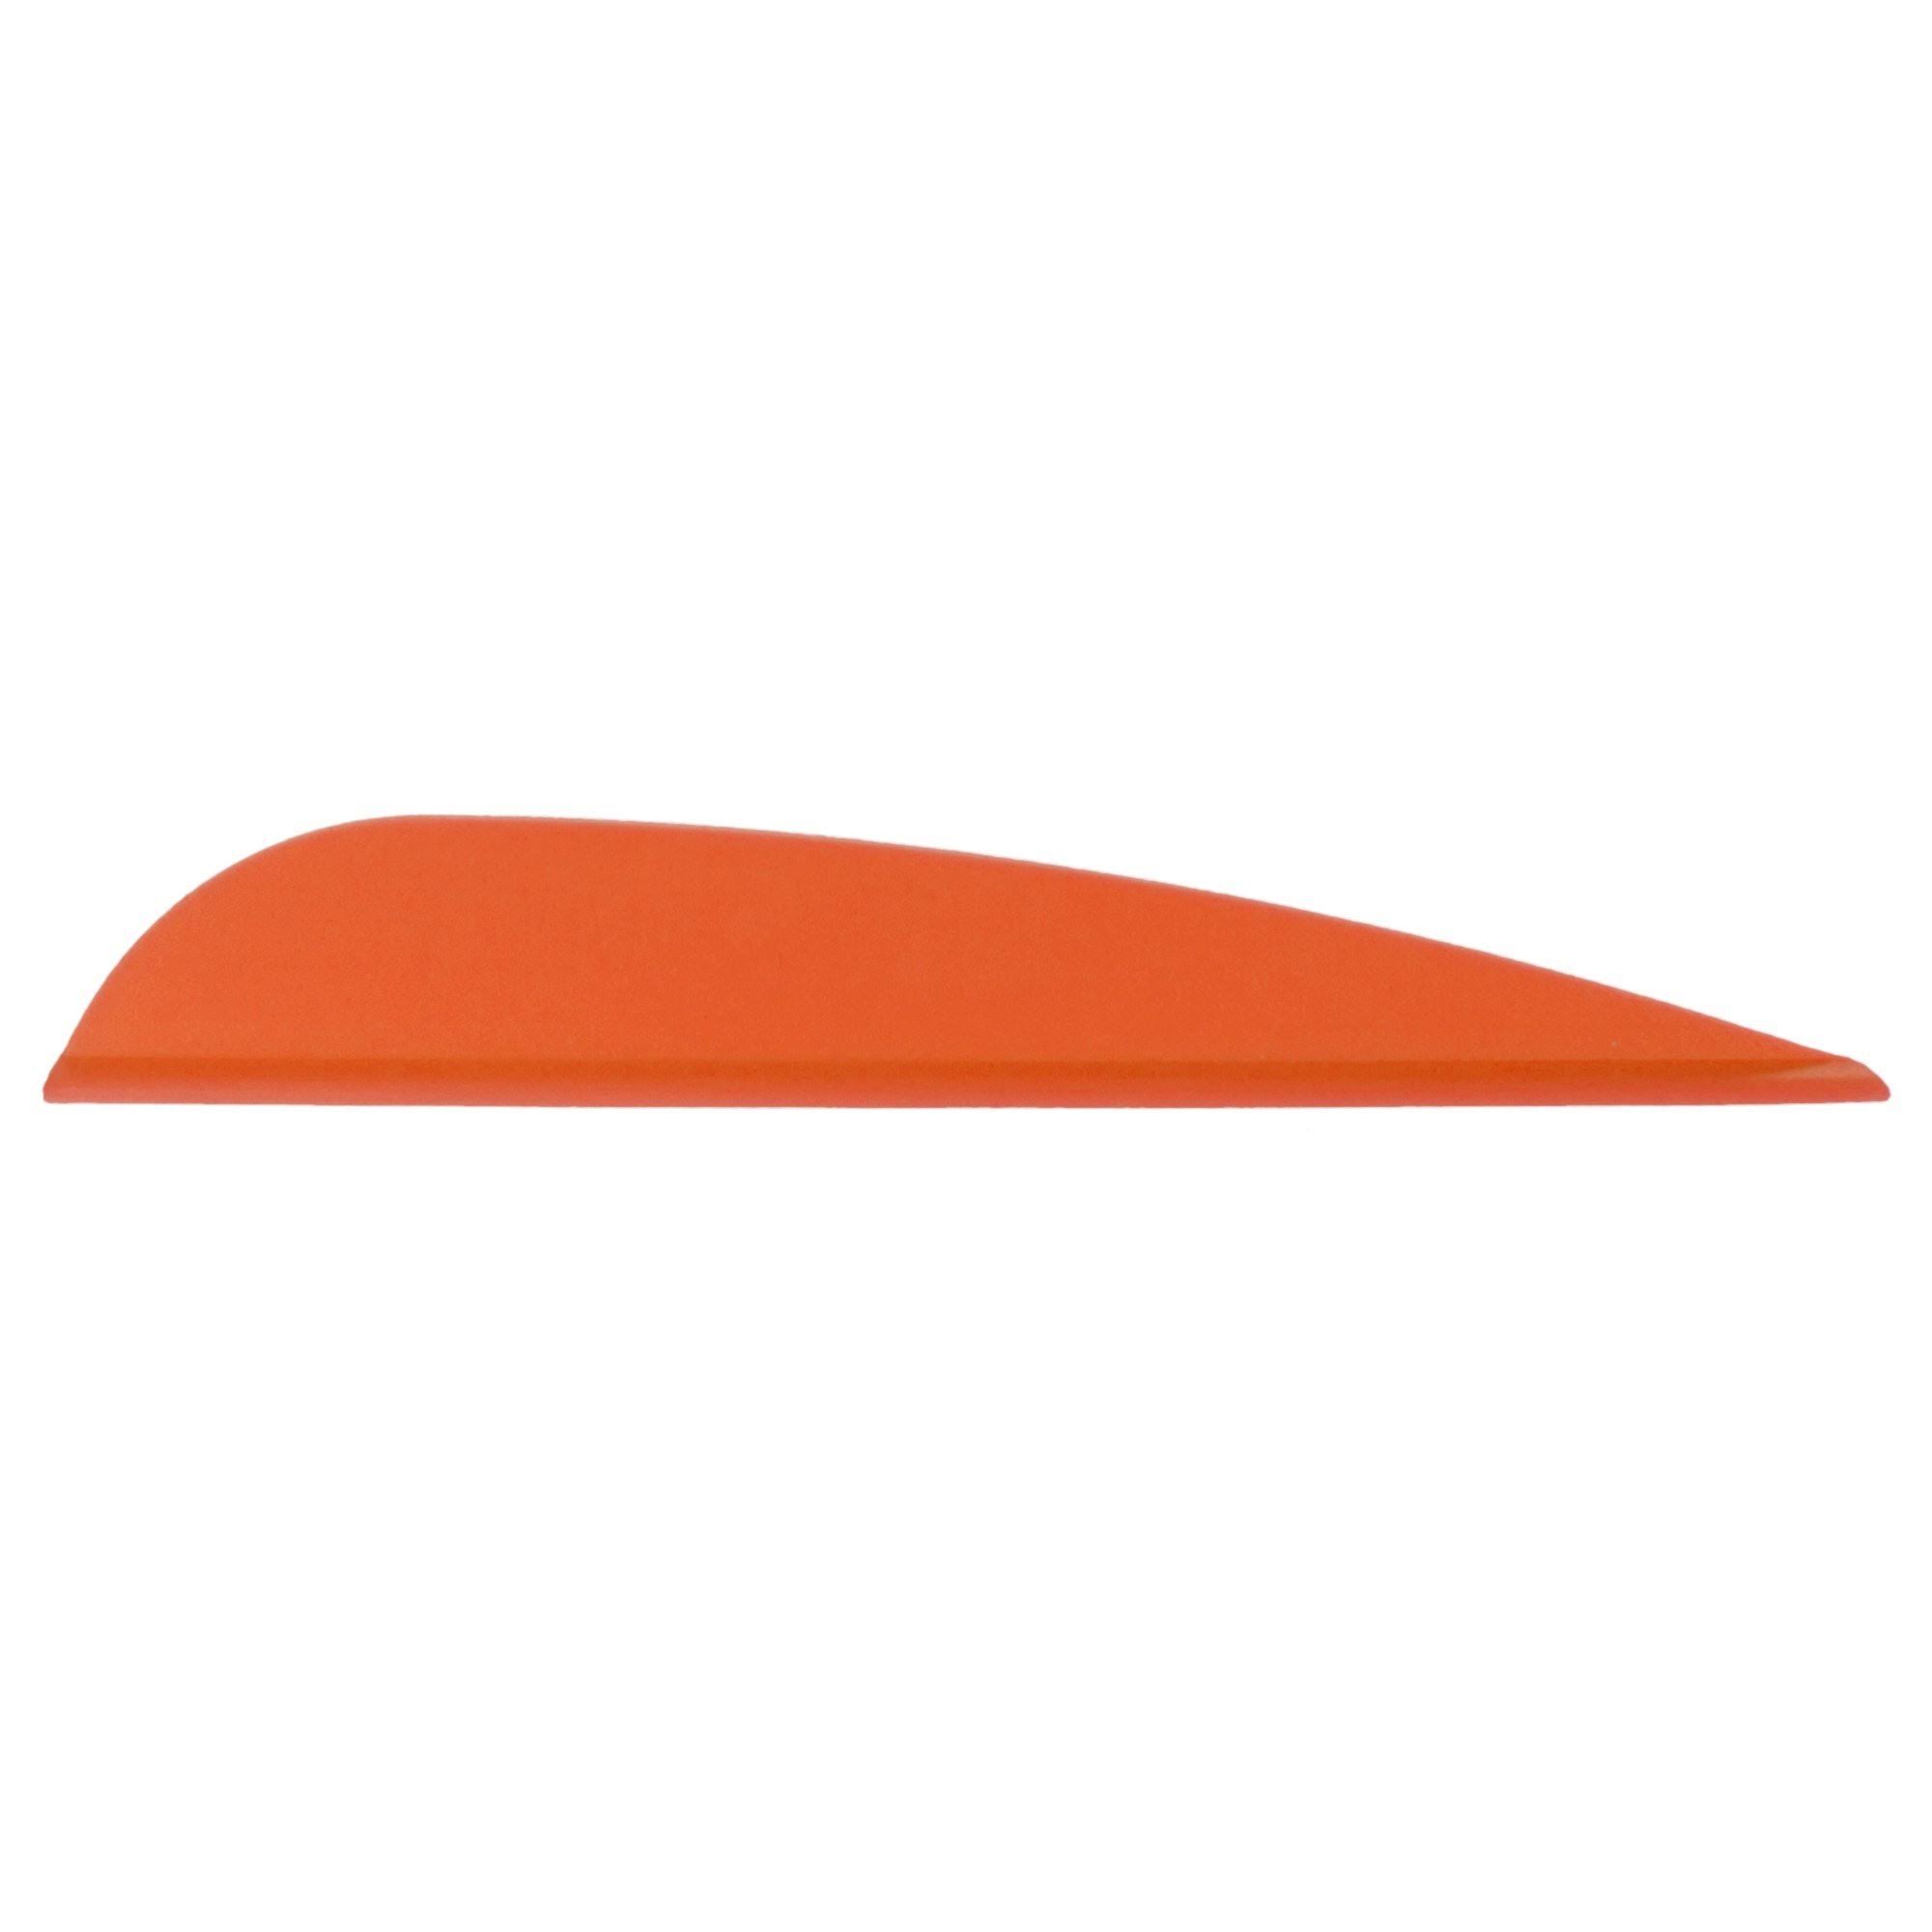 Aae Elite Vane Plastic Fletch - Fire Orange, 2.375", 100pk